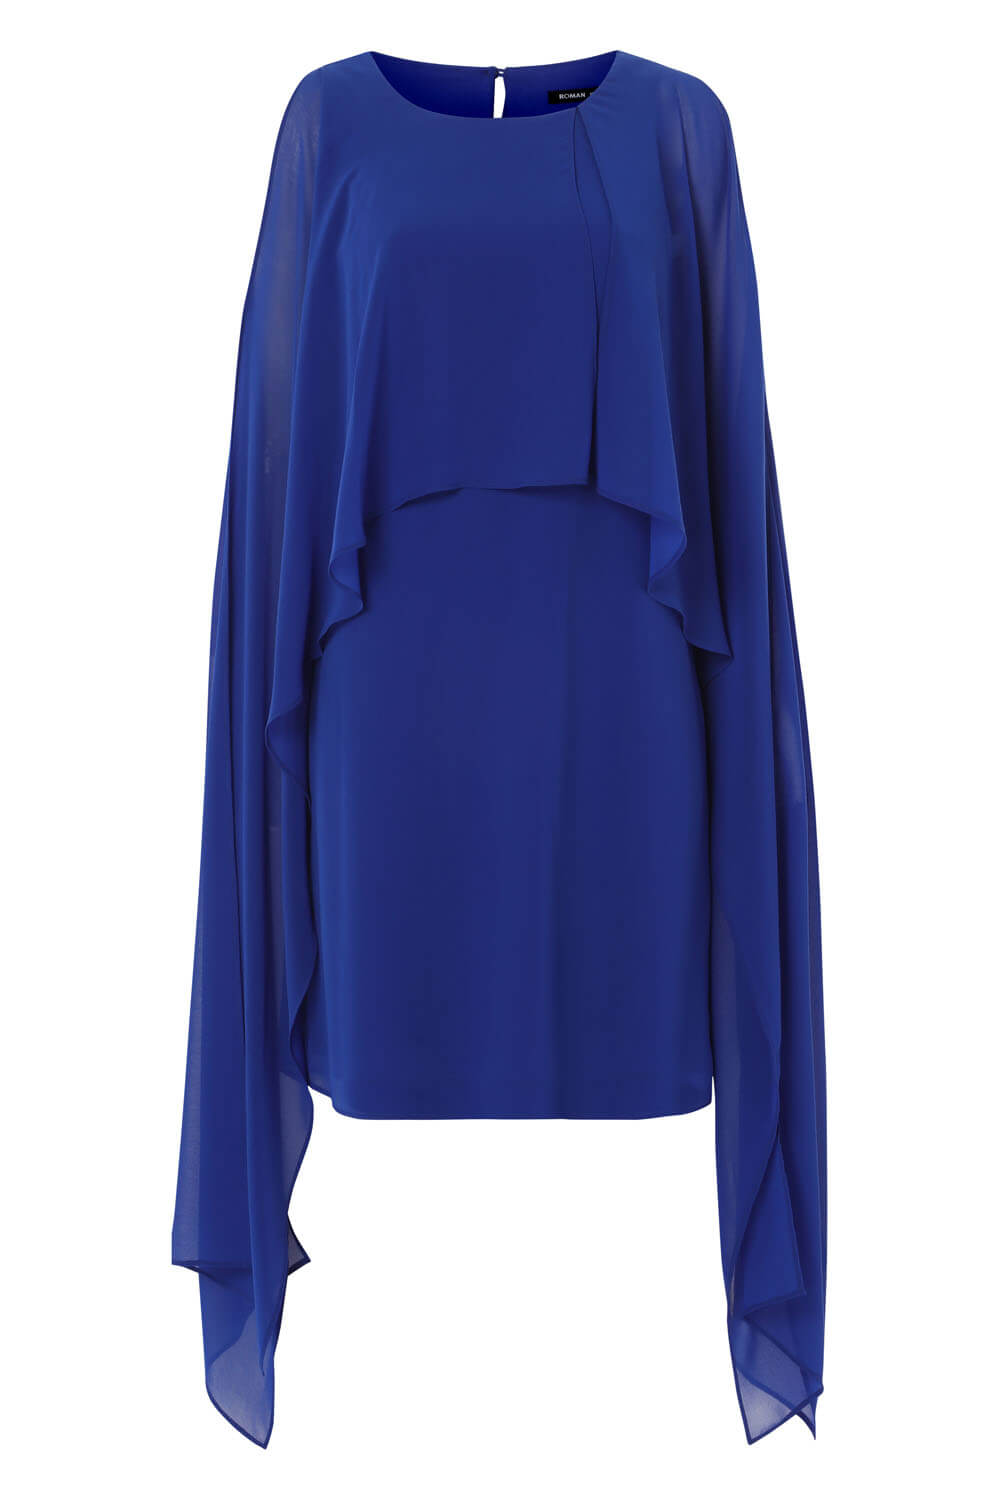 Royal Blue Chiffon Cold Shoulder Sleeve Dress, Image 5 of 5